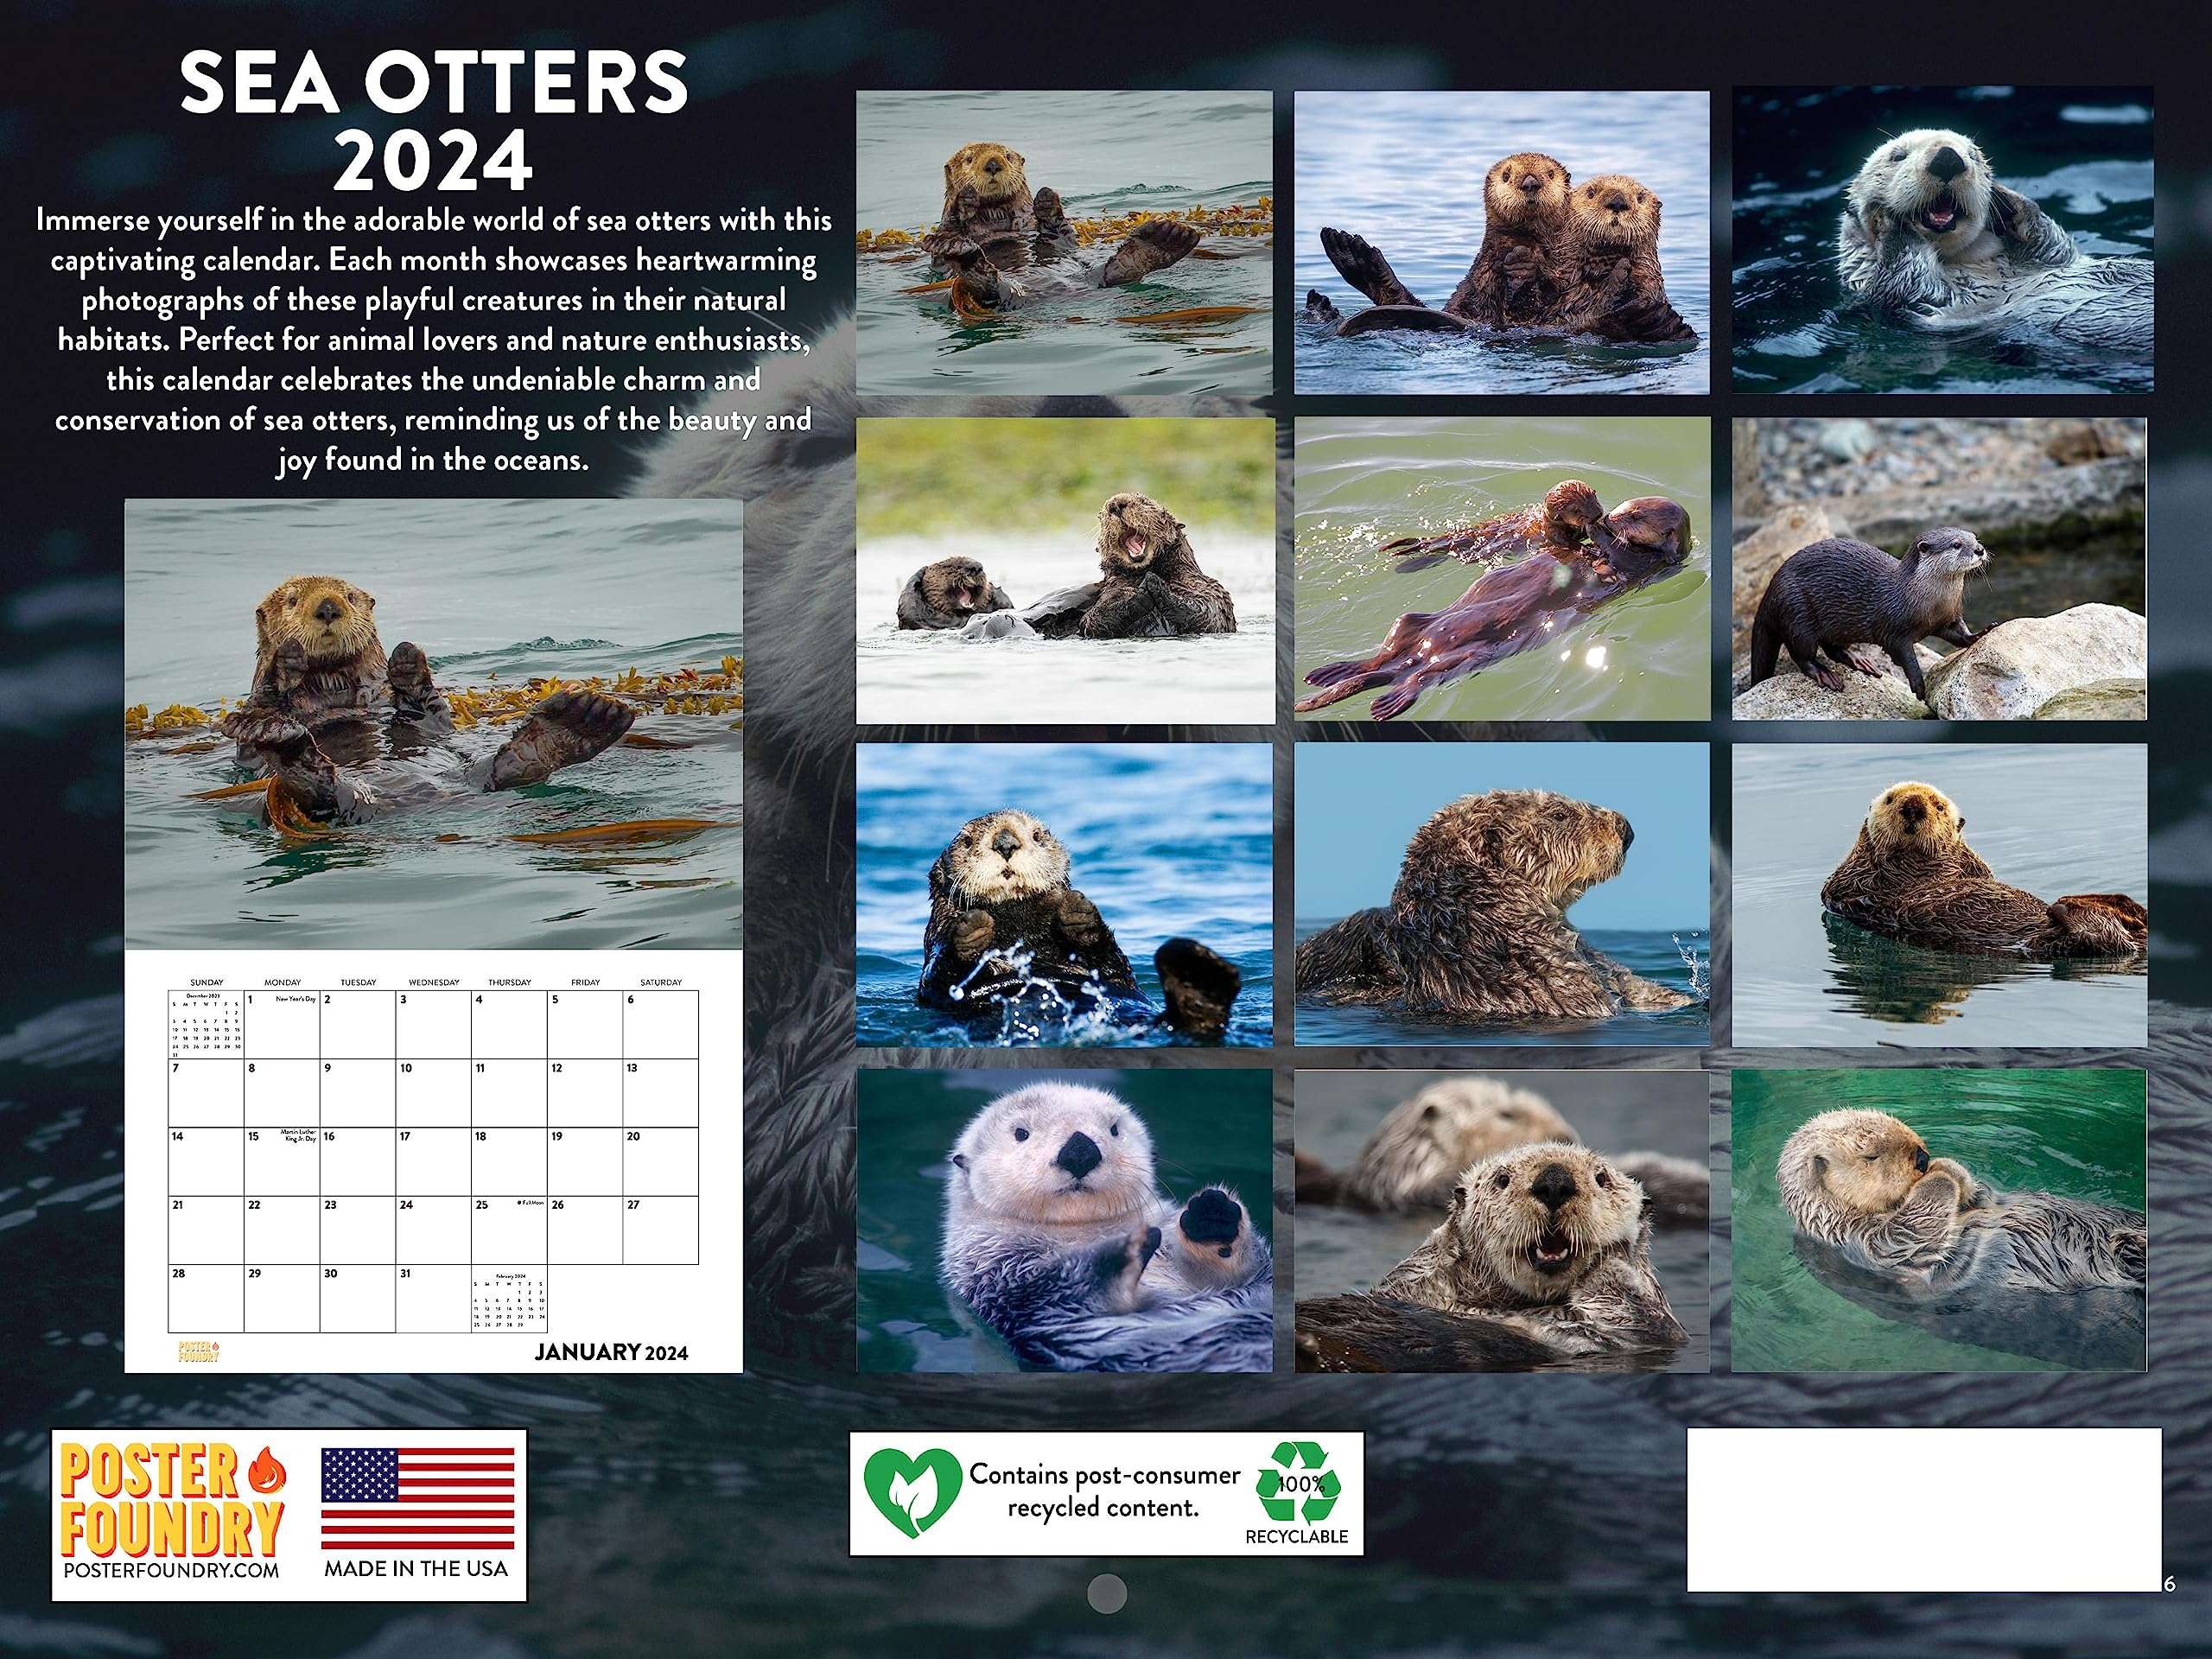 Mua Sea Otter Calendar 2024 trên Amazon Mỹ chính hãng 2023 Fado